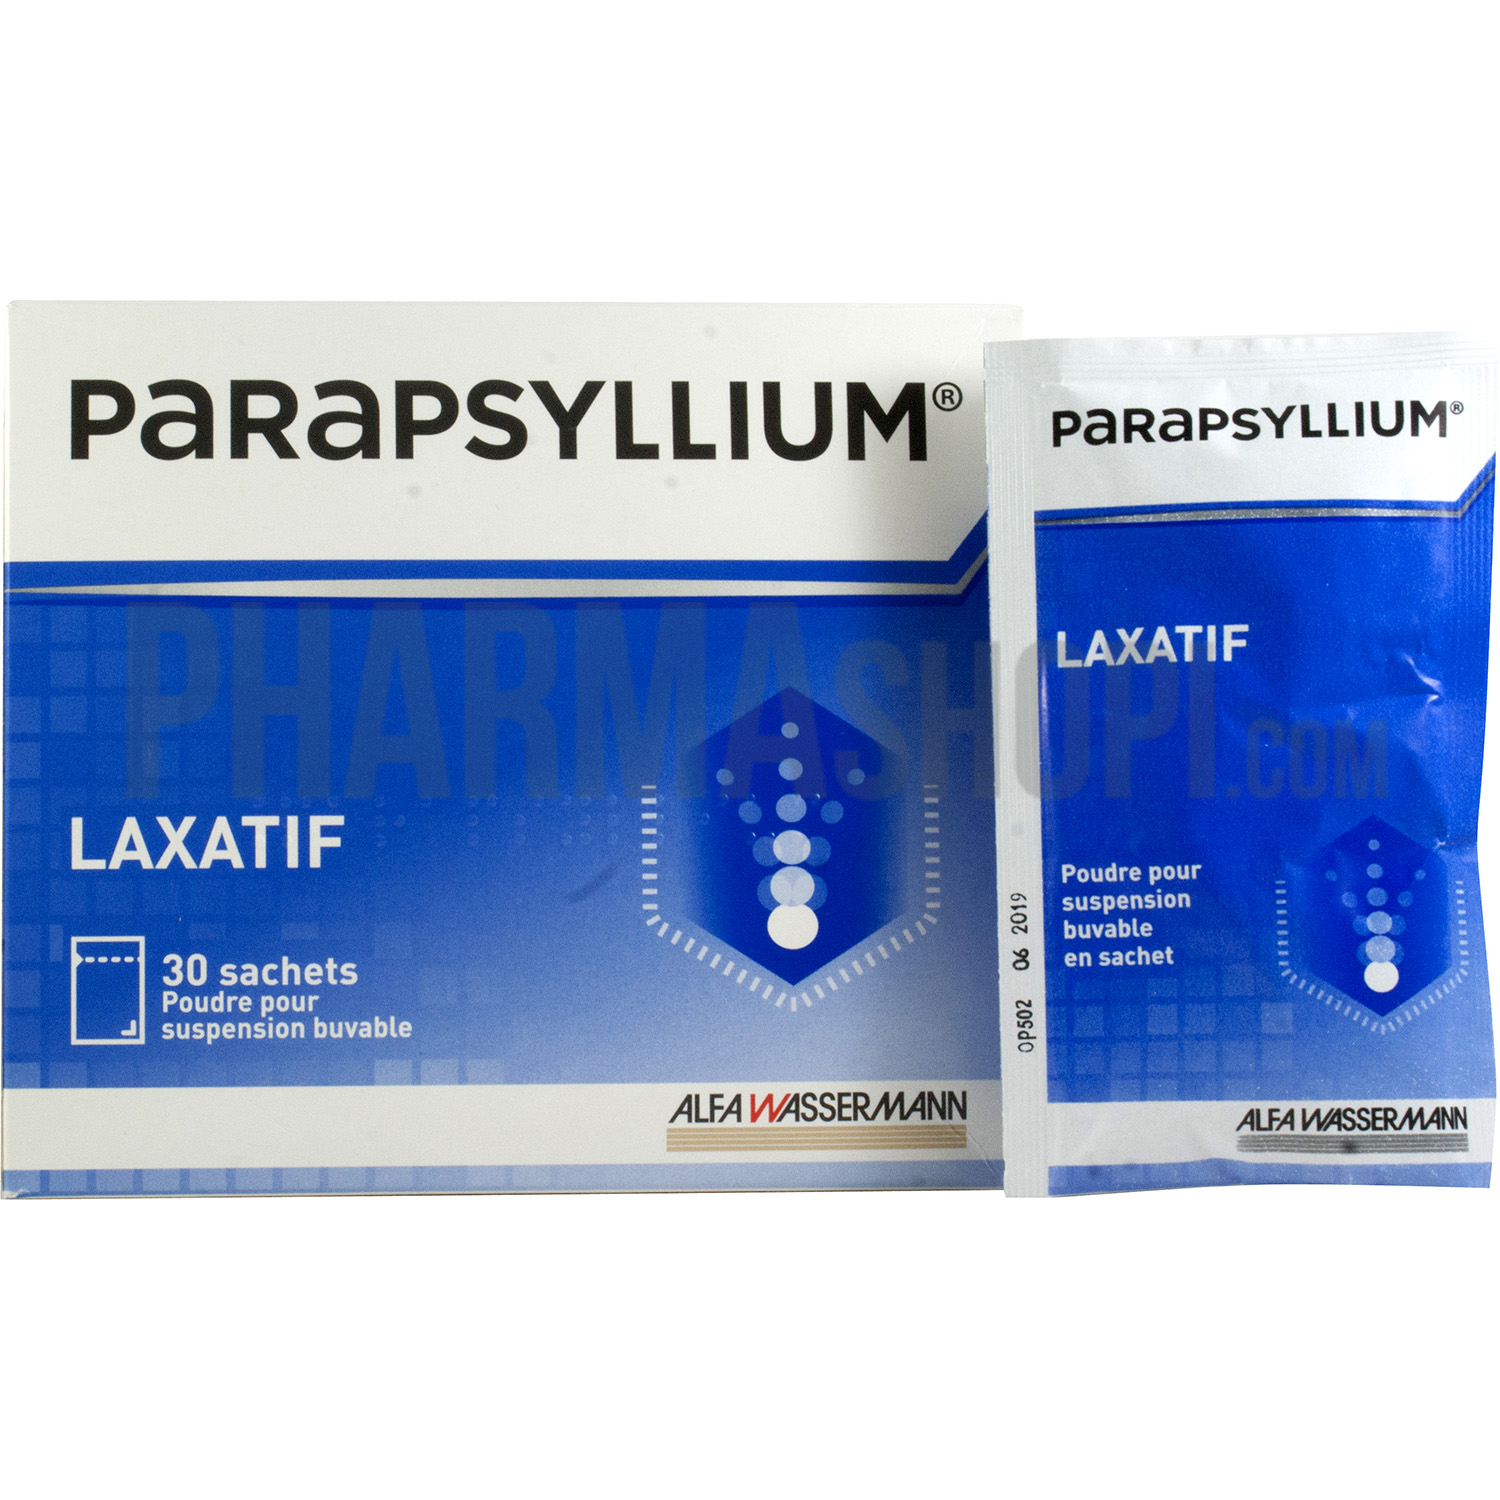 https://www.pharmashopi.com/images/Image/Parapsyllium-laxatif-boite-de-30-sachets3491688-1.jpg